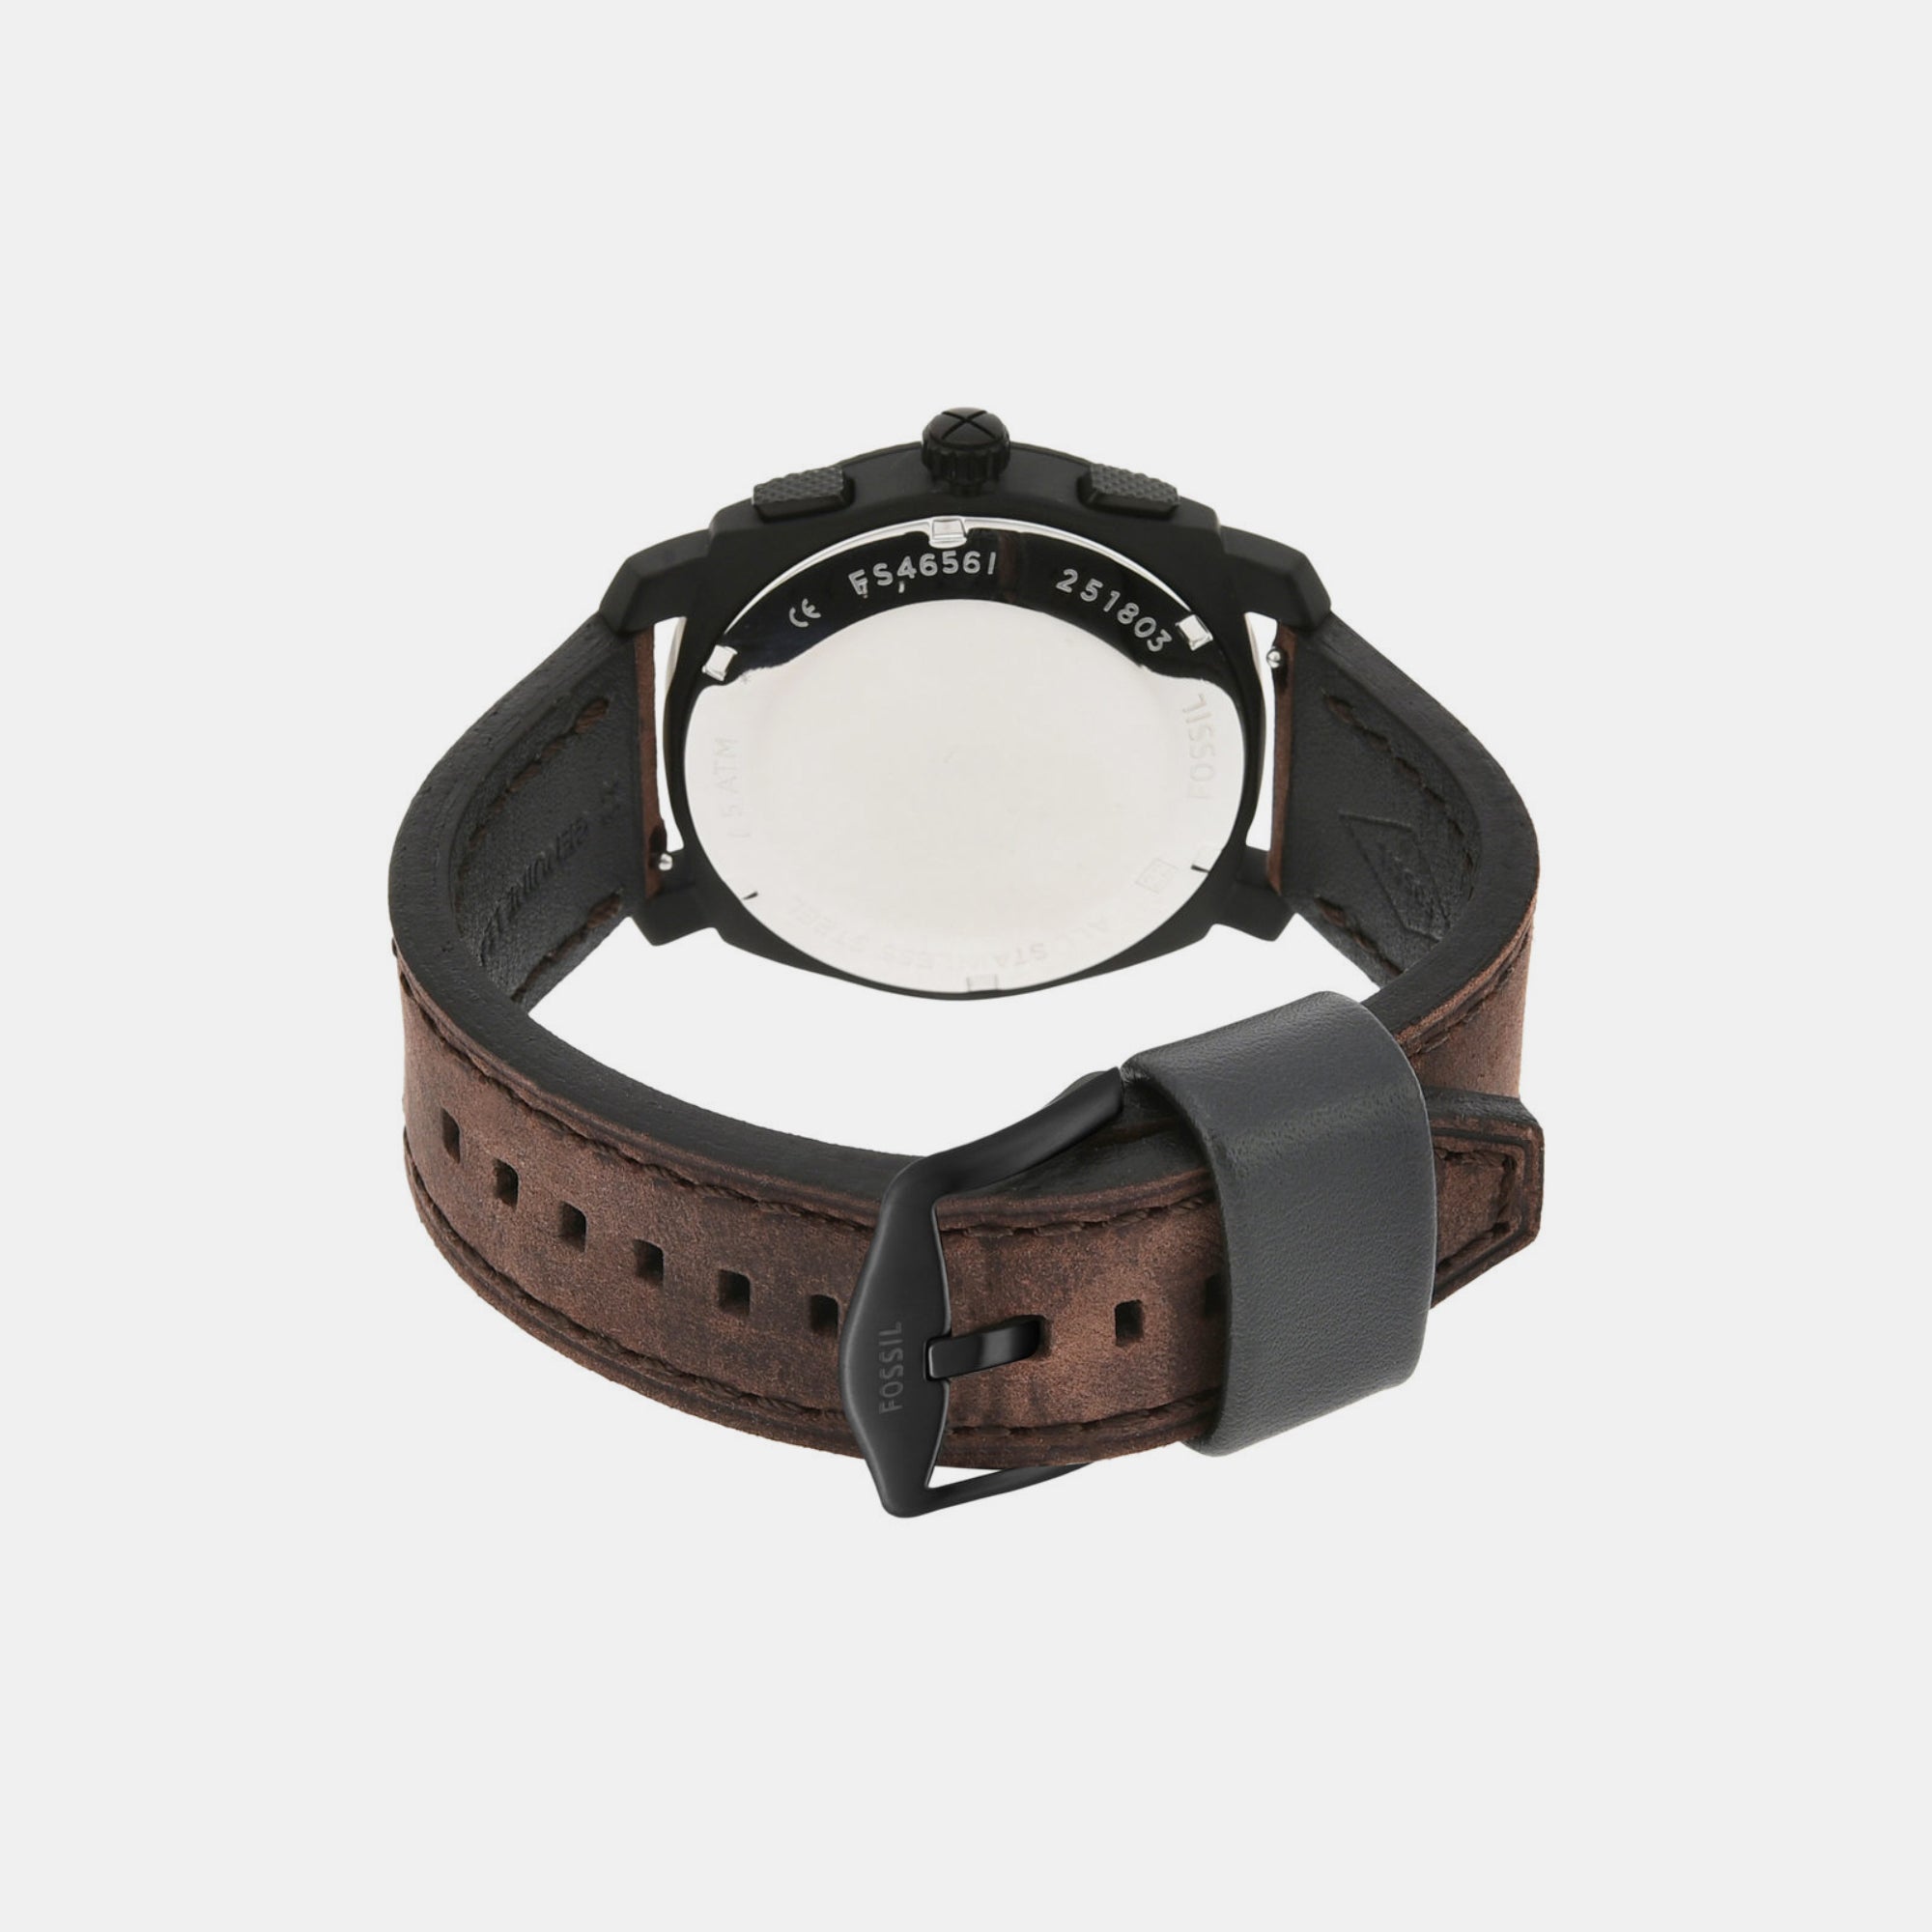 FOSSIL Original Ersatz Lederarmband FS4656 Uhrband strap Braun brown 22 mm  | eBay